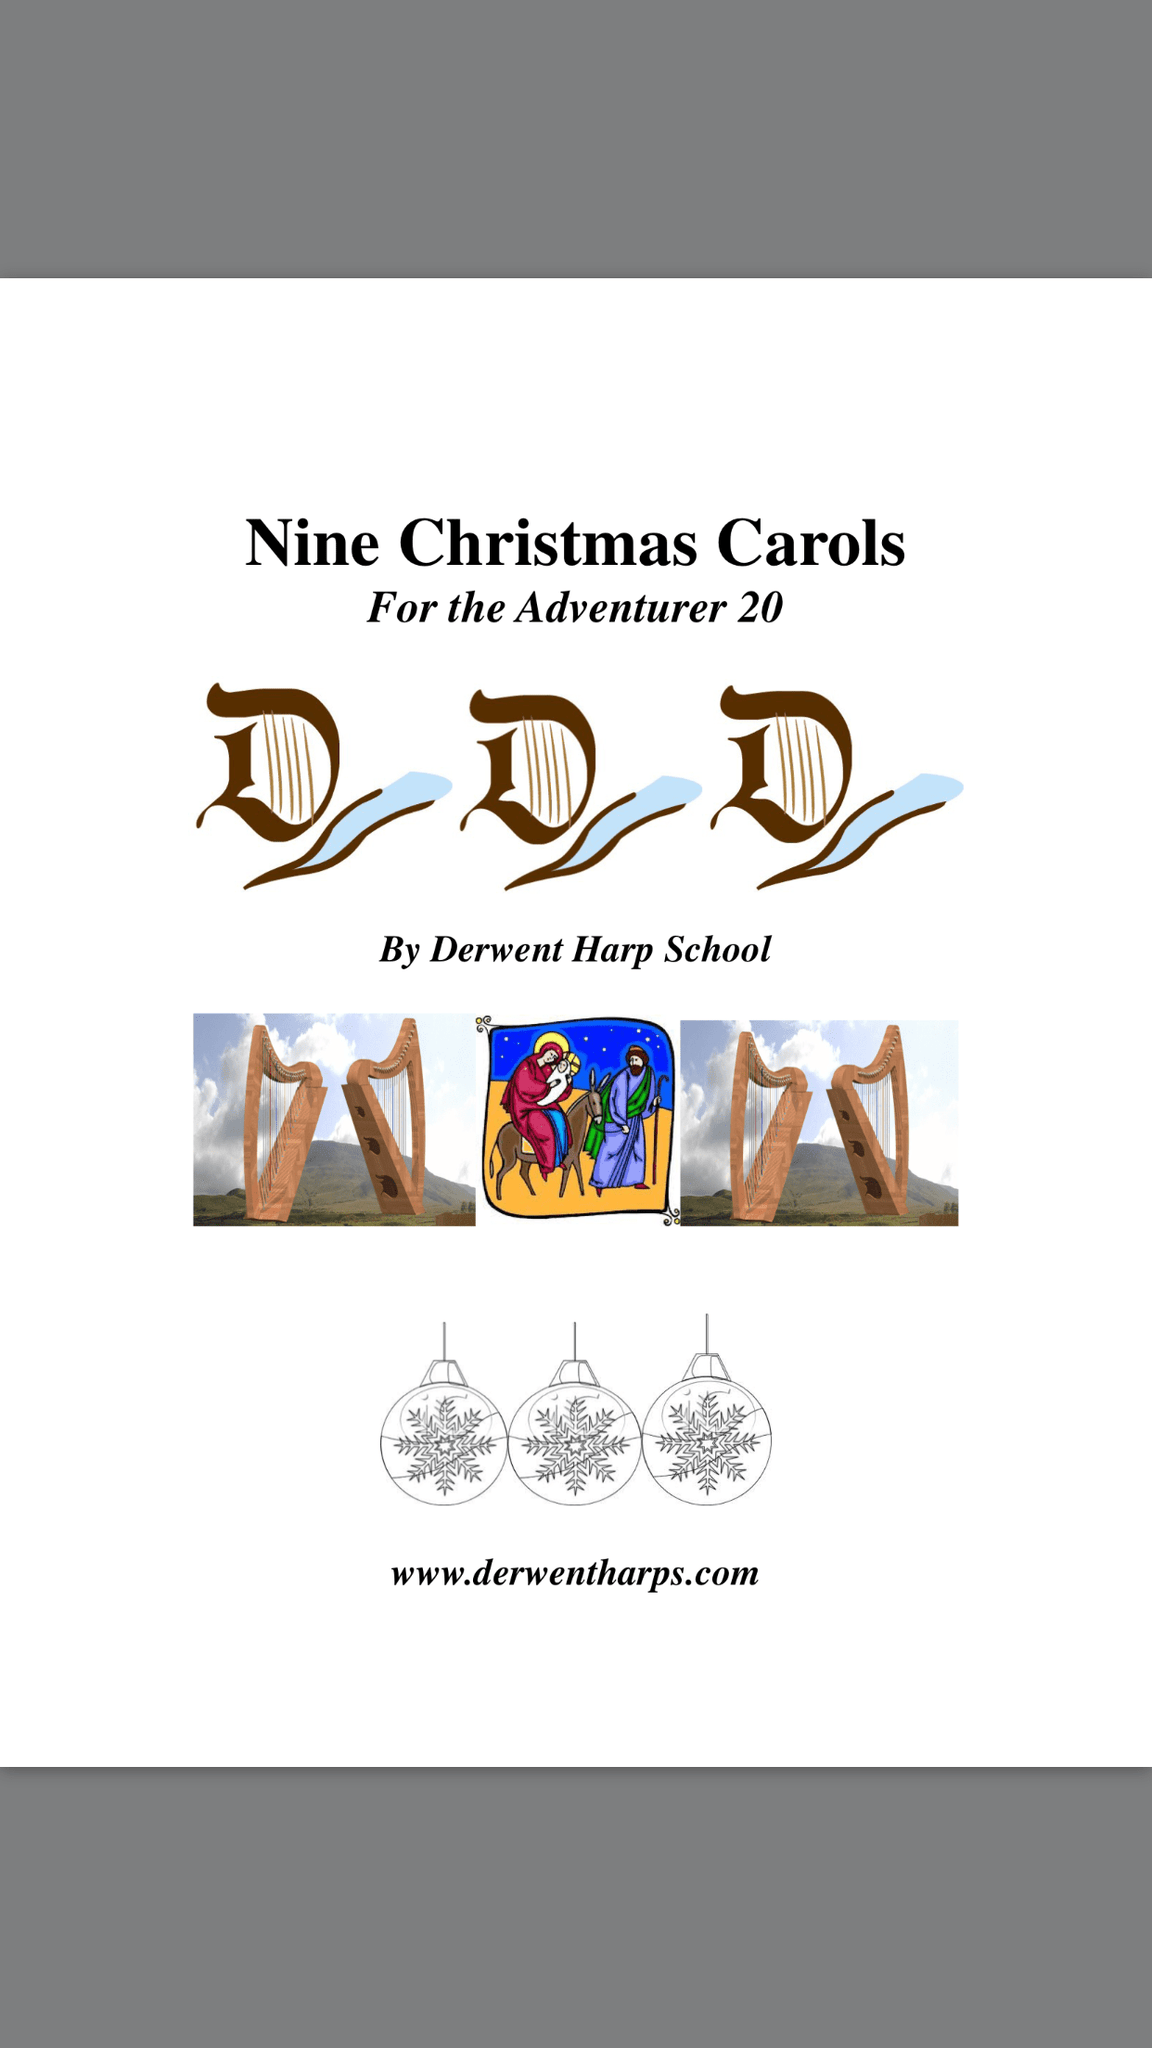 Nine Christmas Carols for the Adventurer 20